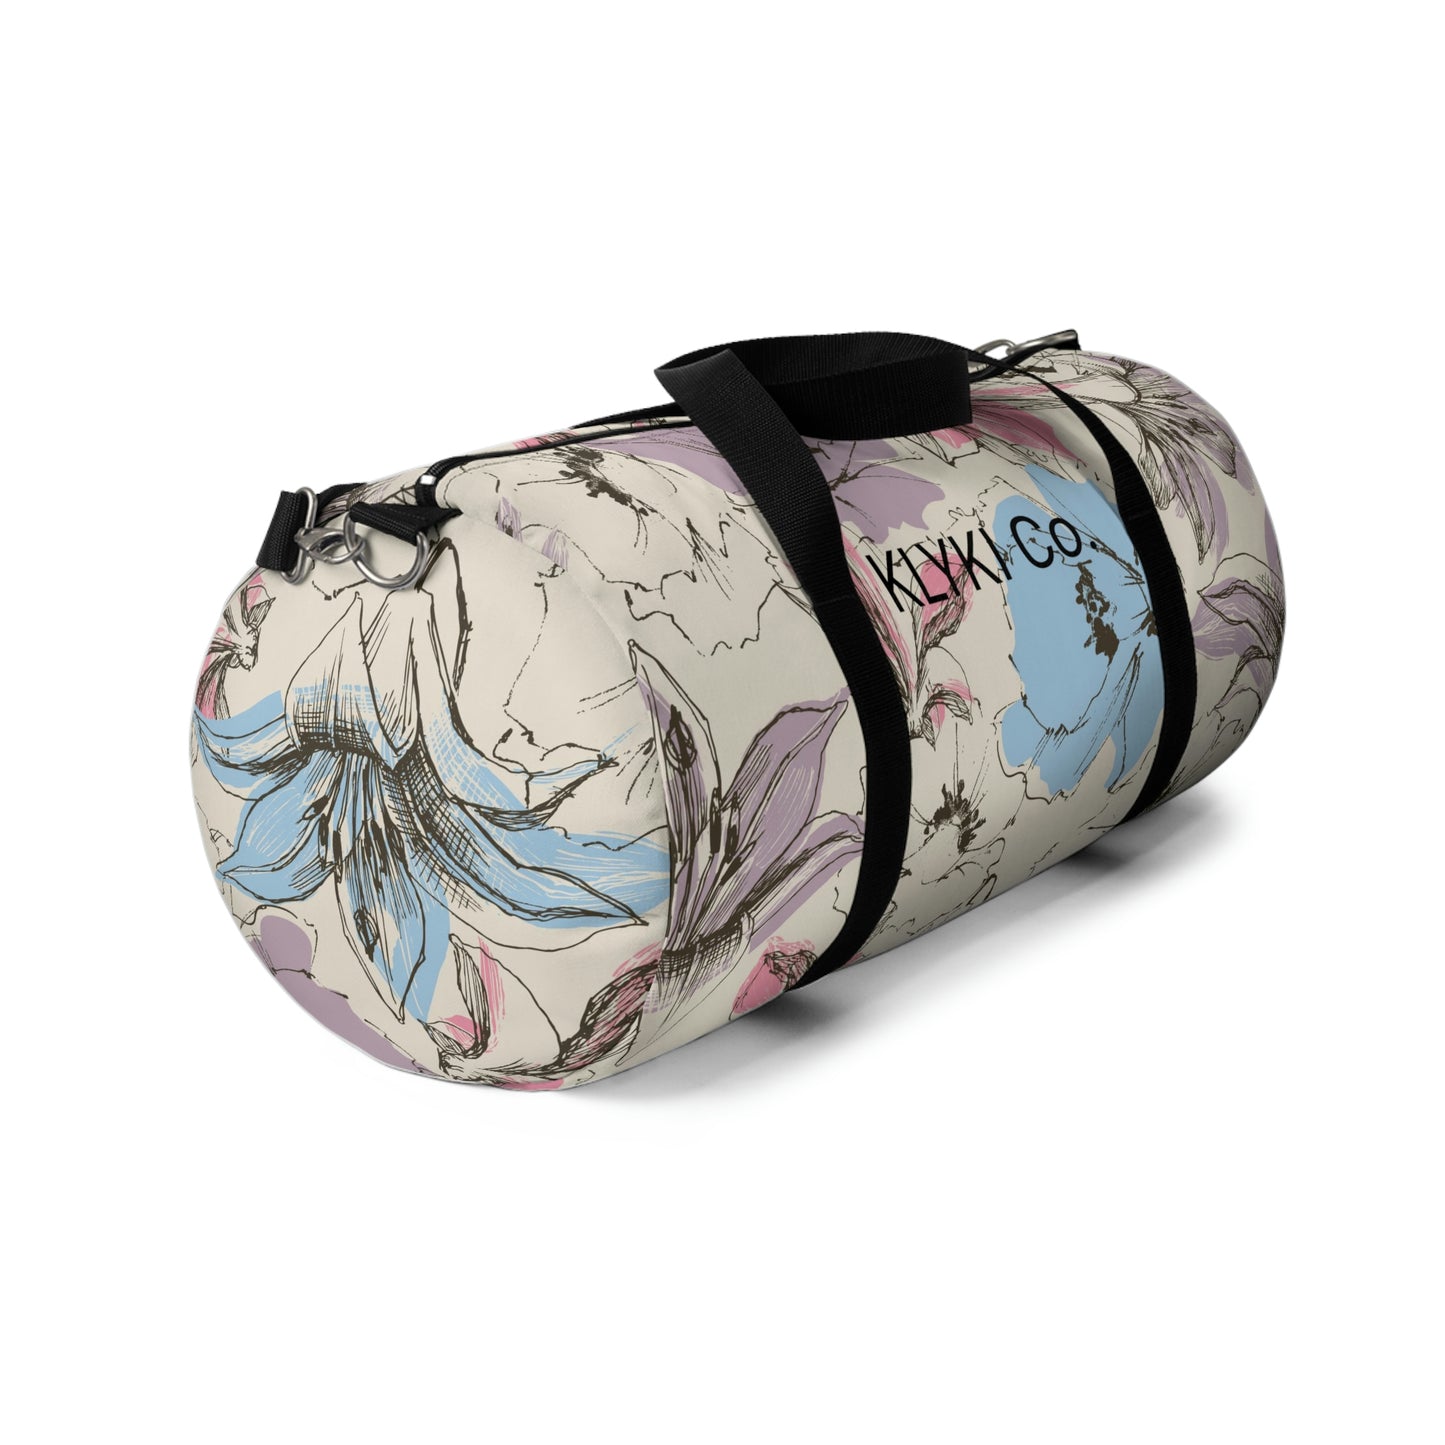 KLYKI Co. Floral Duffel Bag